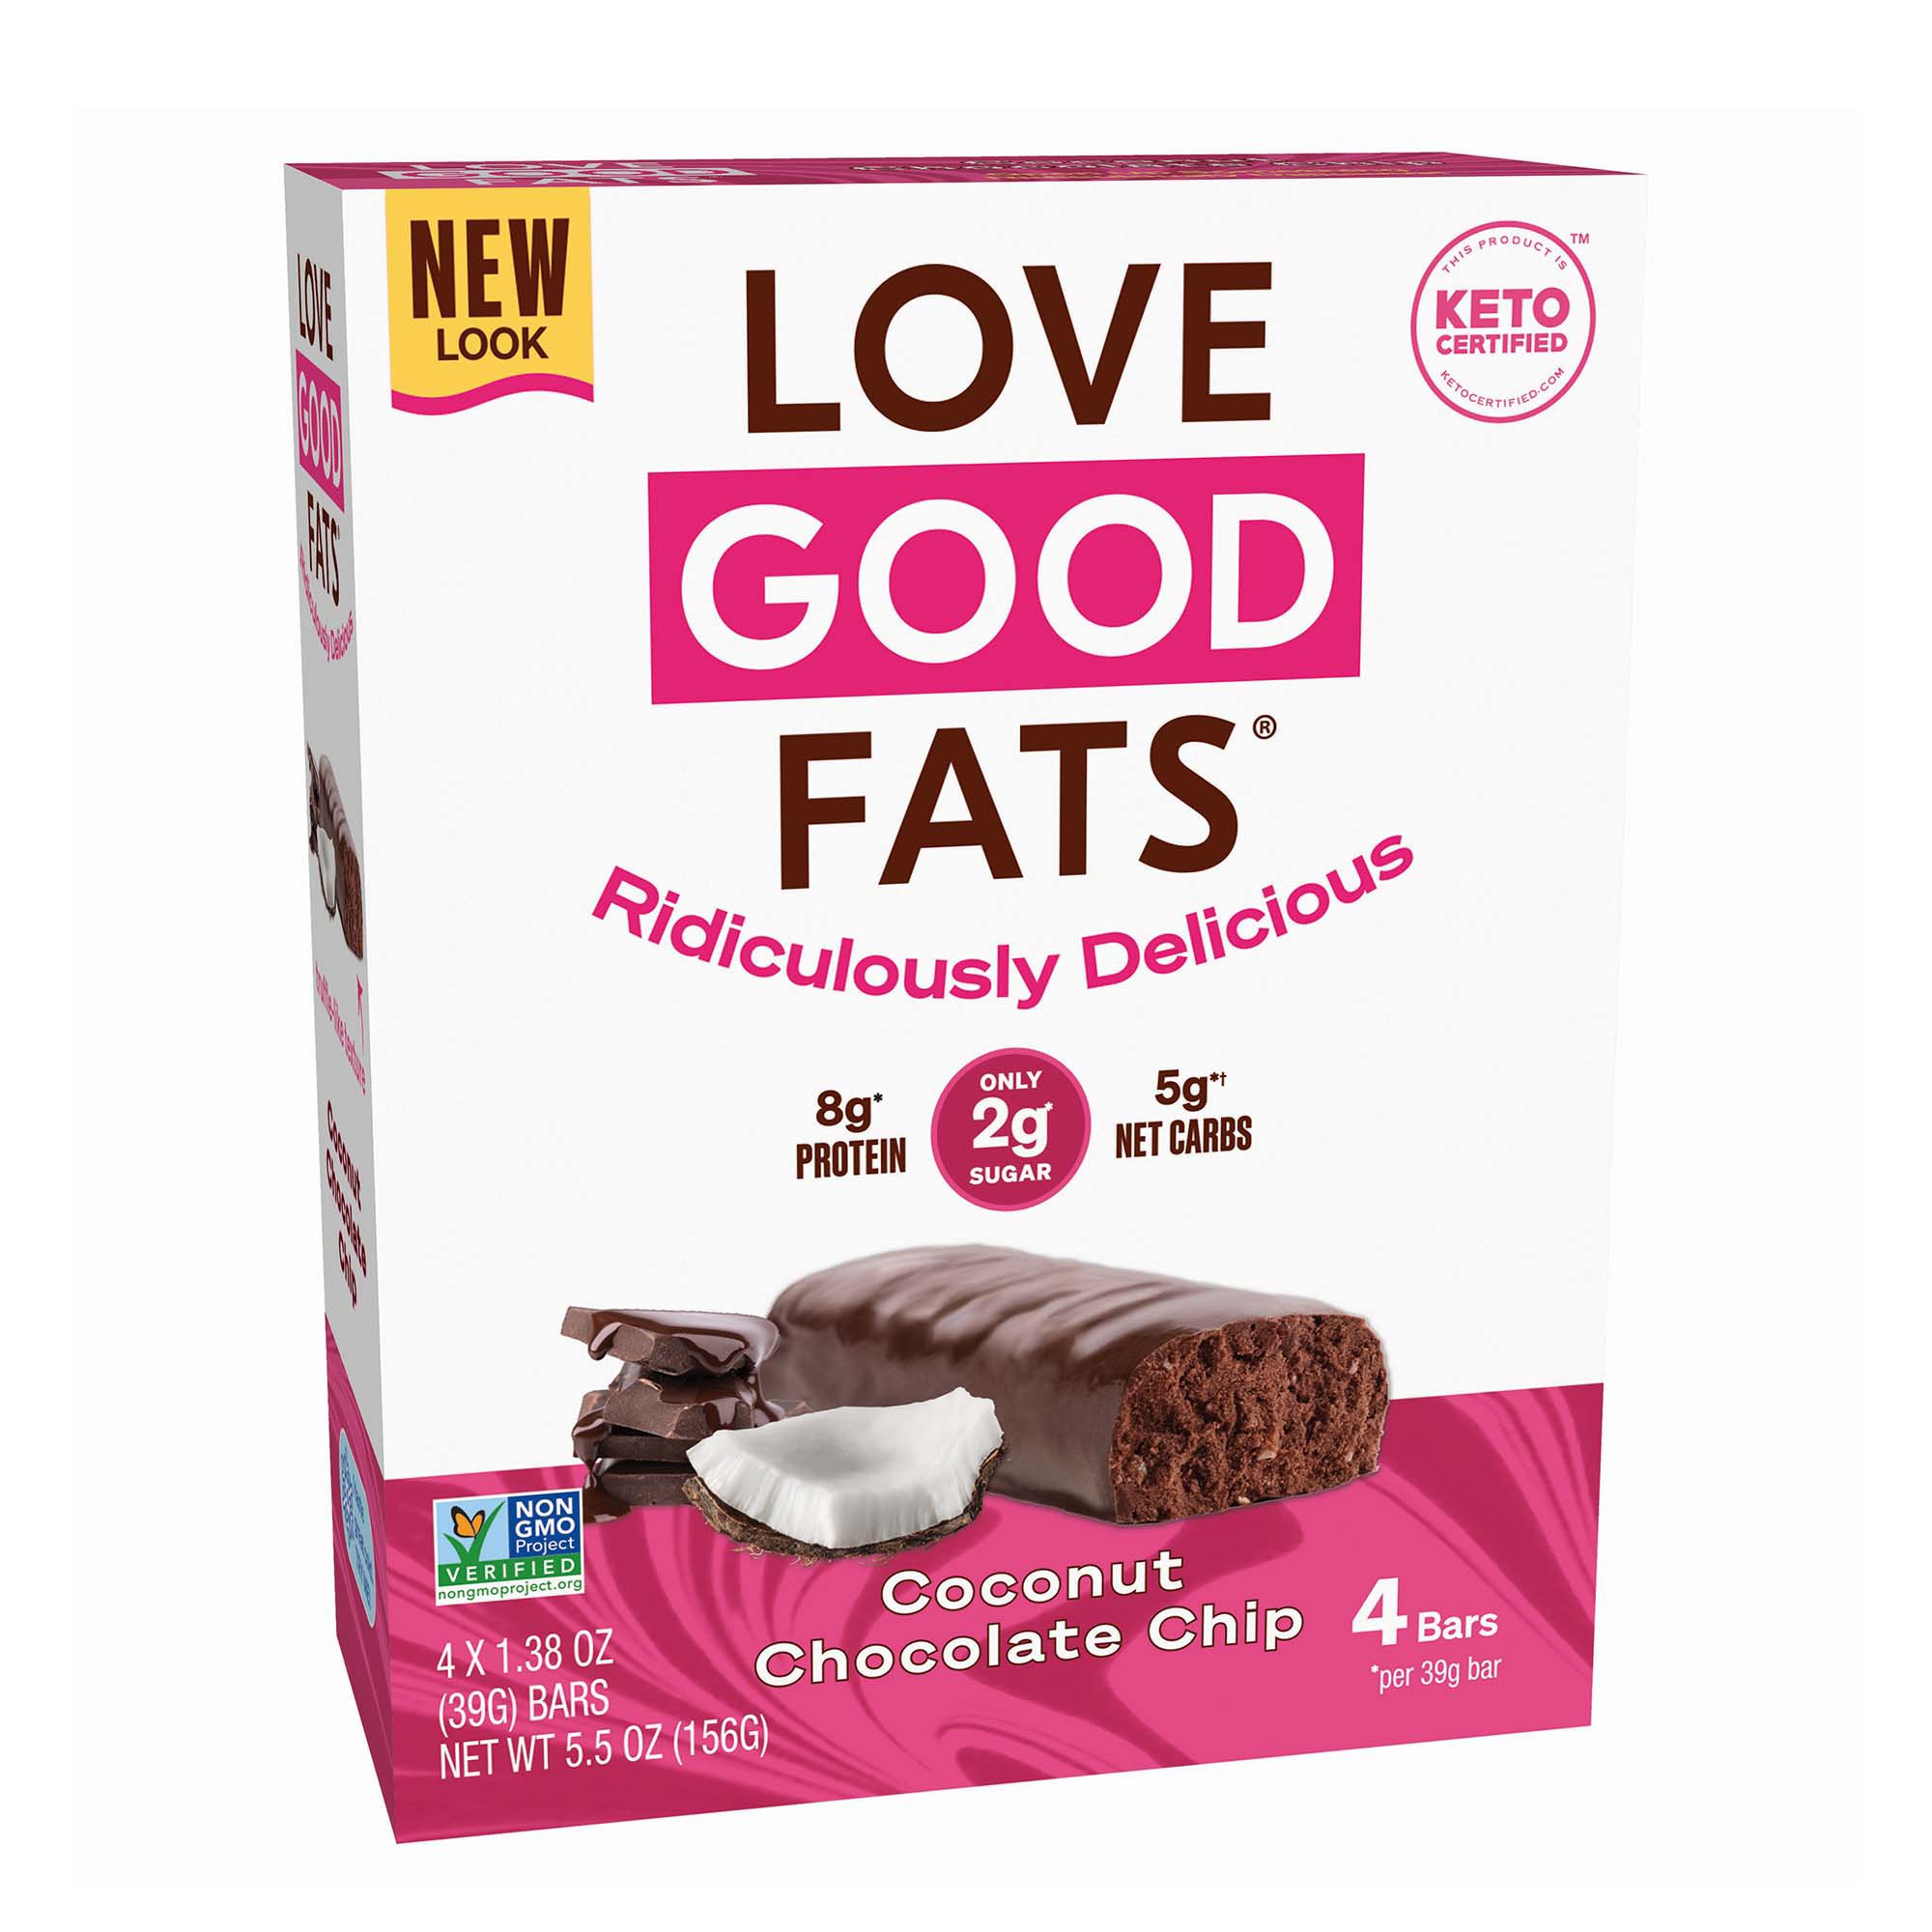 is love good fats keto friendly